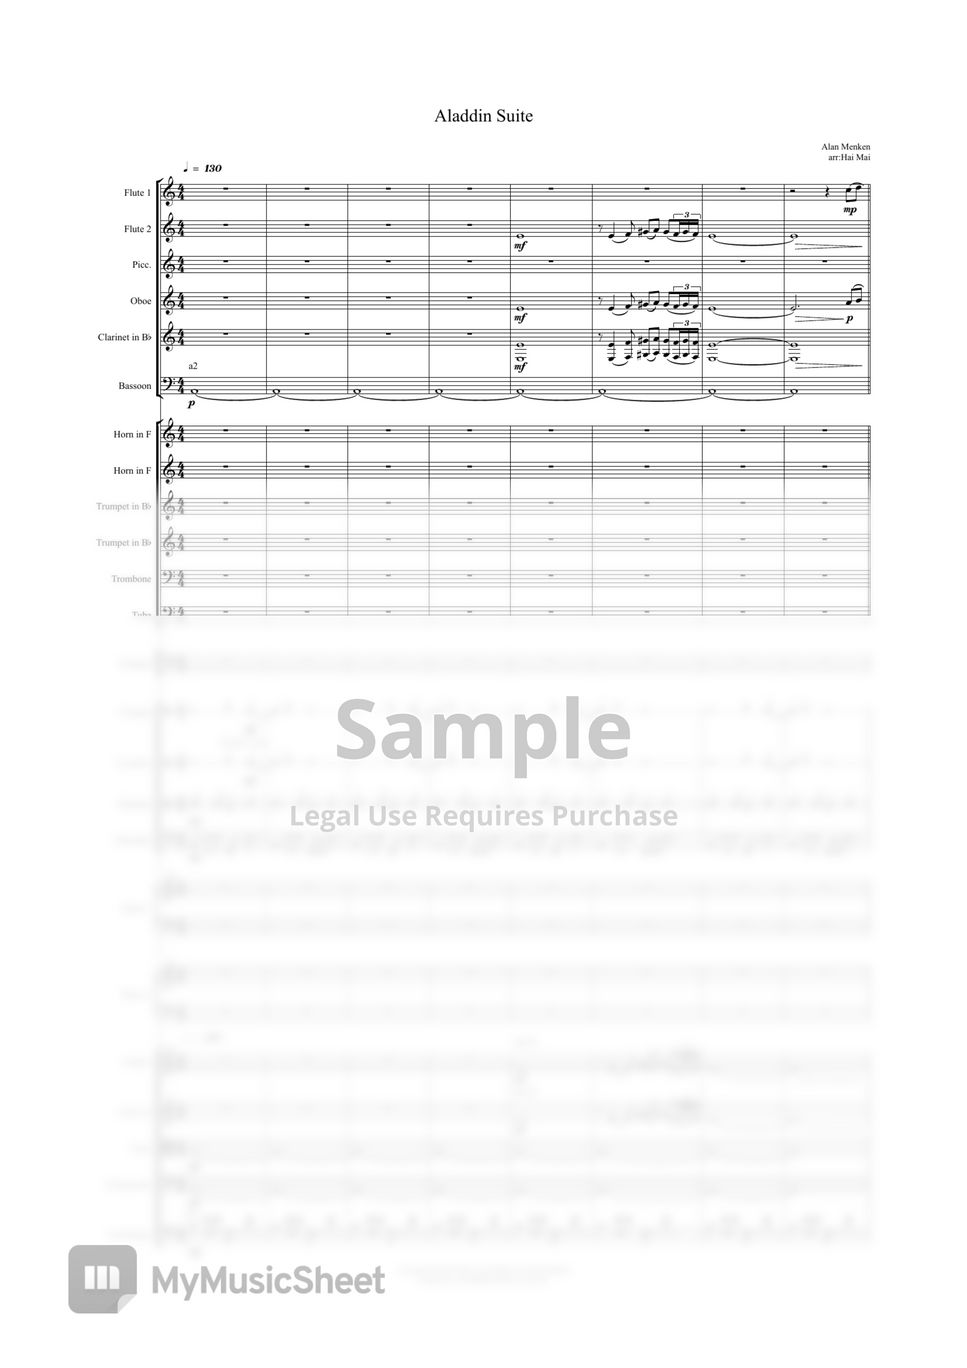 Alan Menken - Aladdin Suite for Orchestra - Full Score by Hai Mai